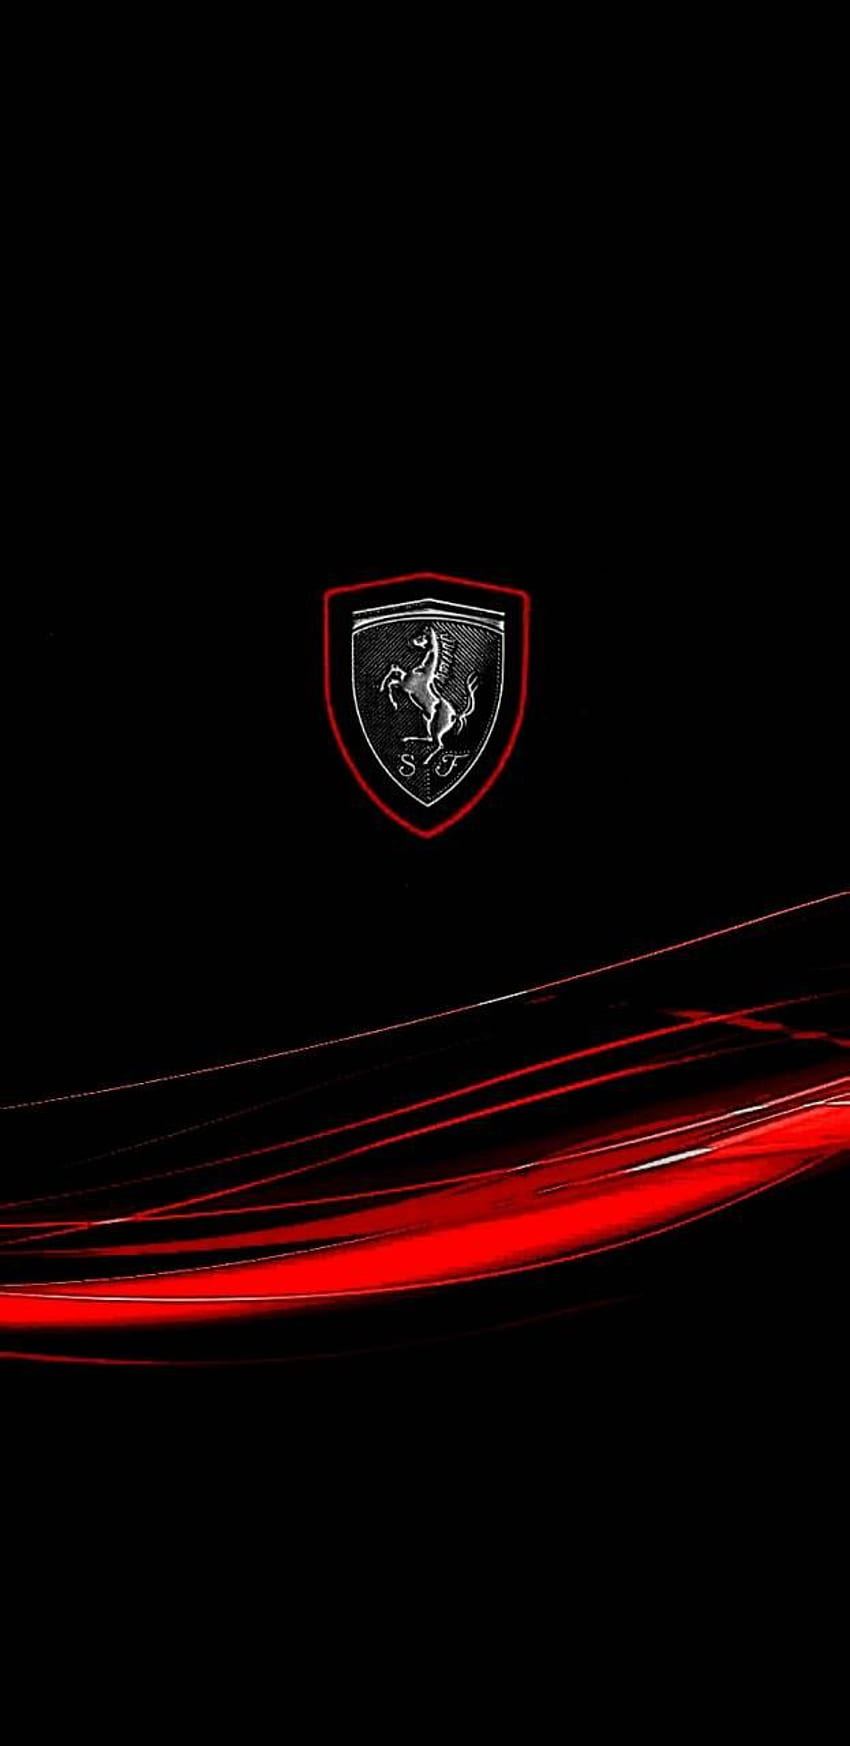 Ferrari logo Wallpaper 4K, Black prancing horse